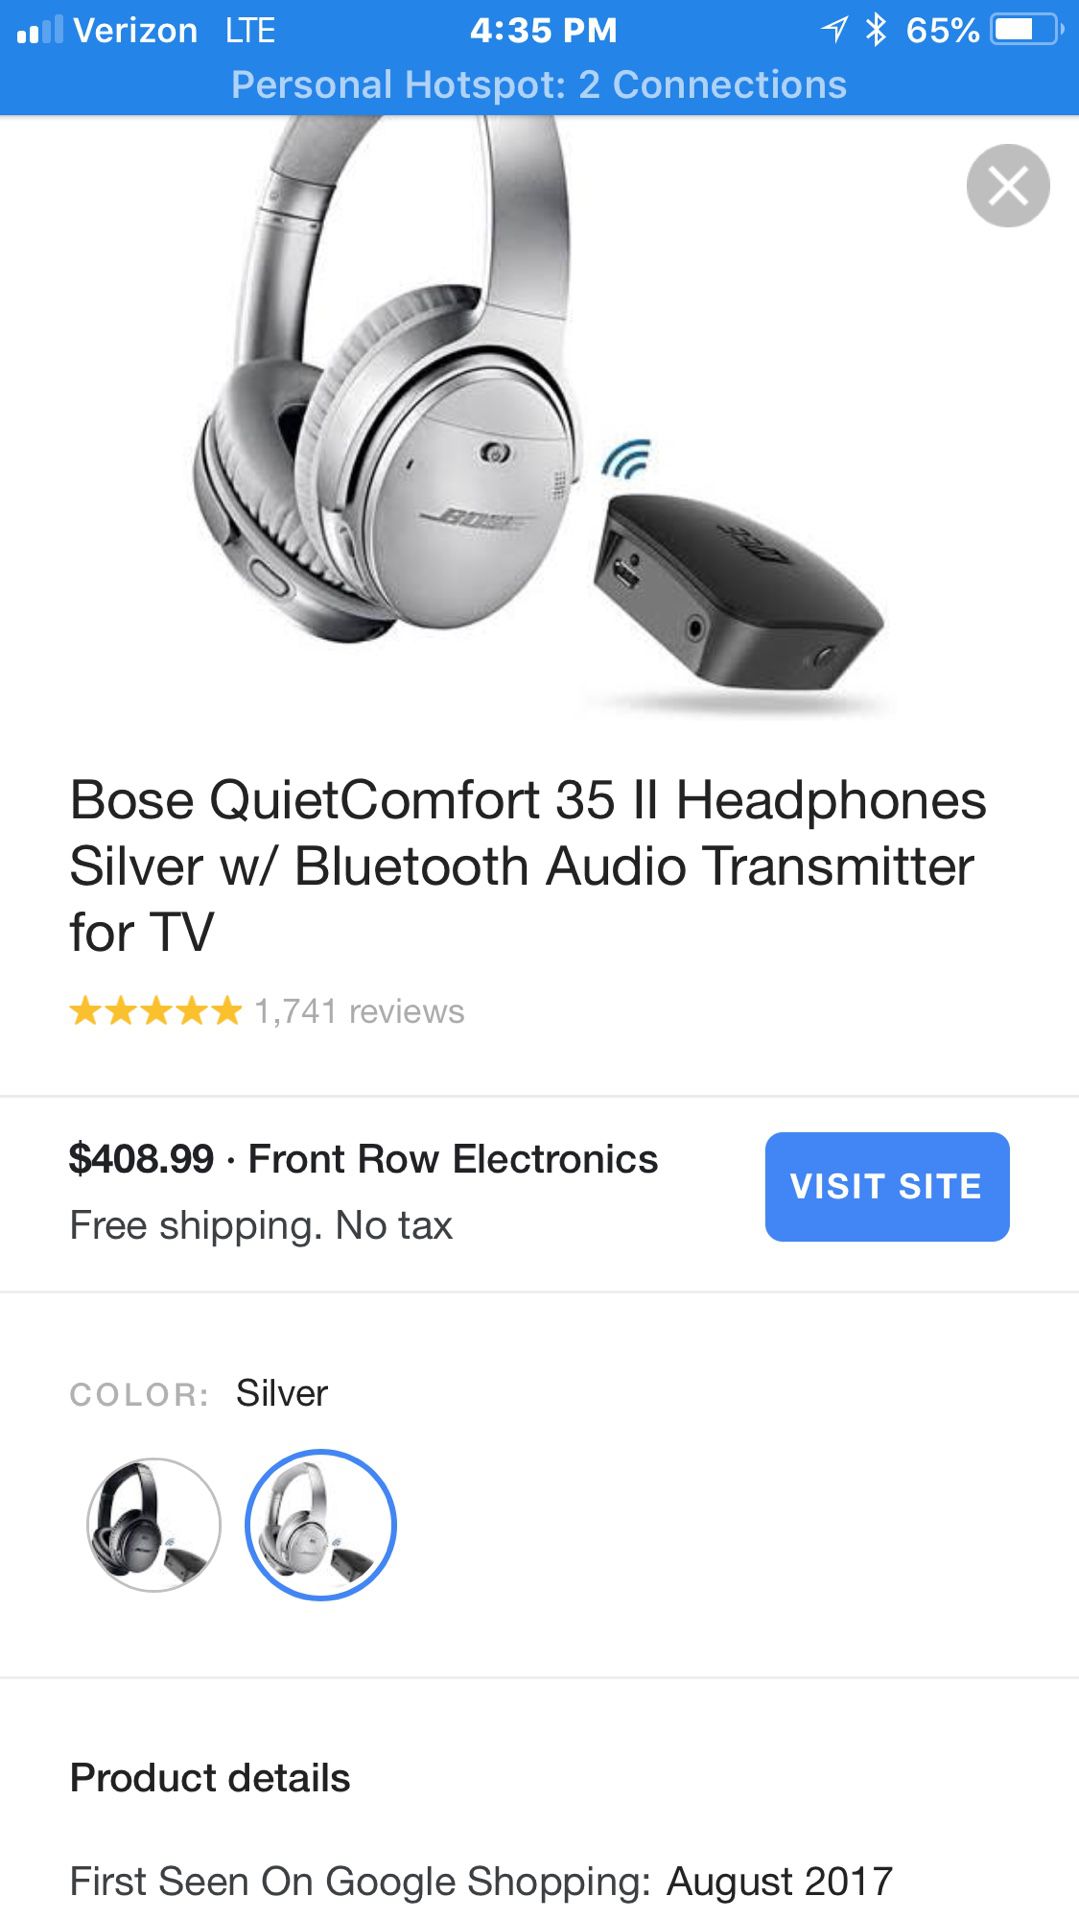 Bose QuietComfort 35 II Headphones Silver w/ Bluetooth Audio Transmitter for TV